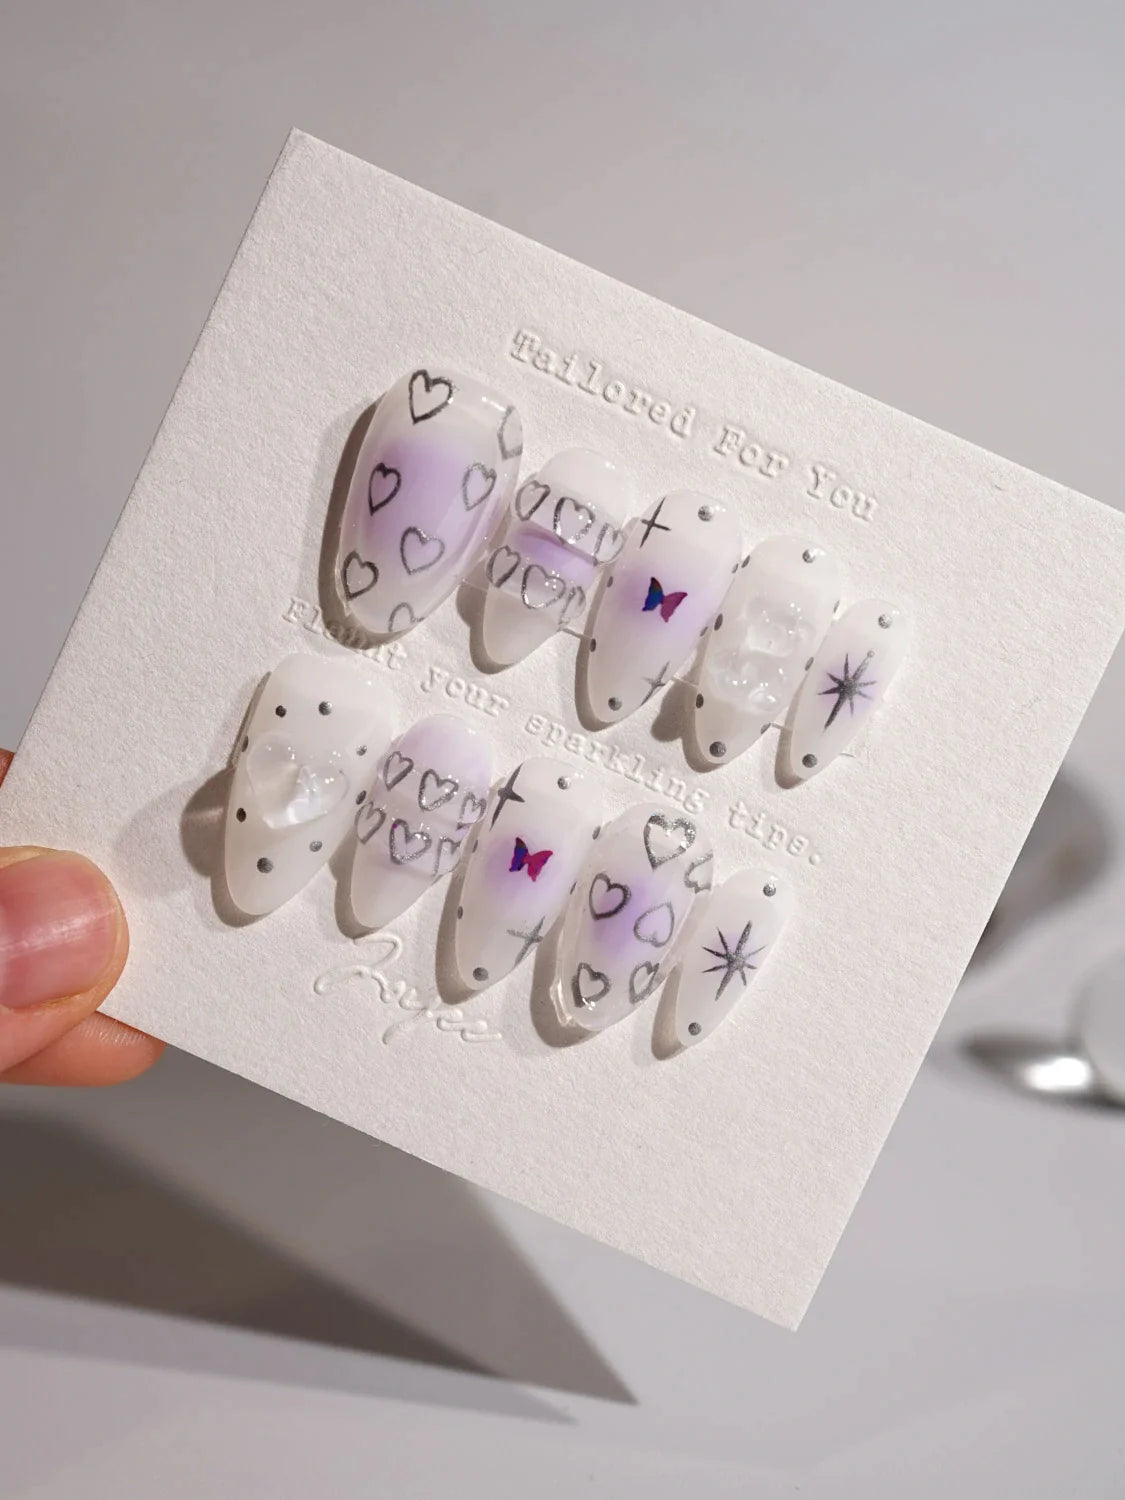 joyee-custom-press-on-nails-y2k-purple-love-med-almond